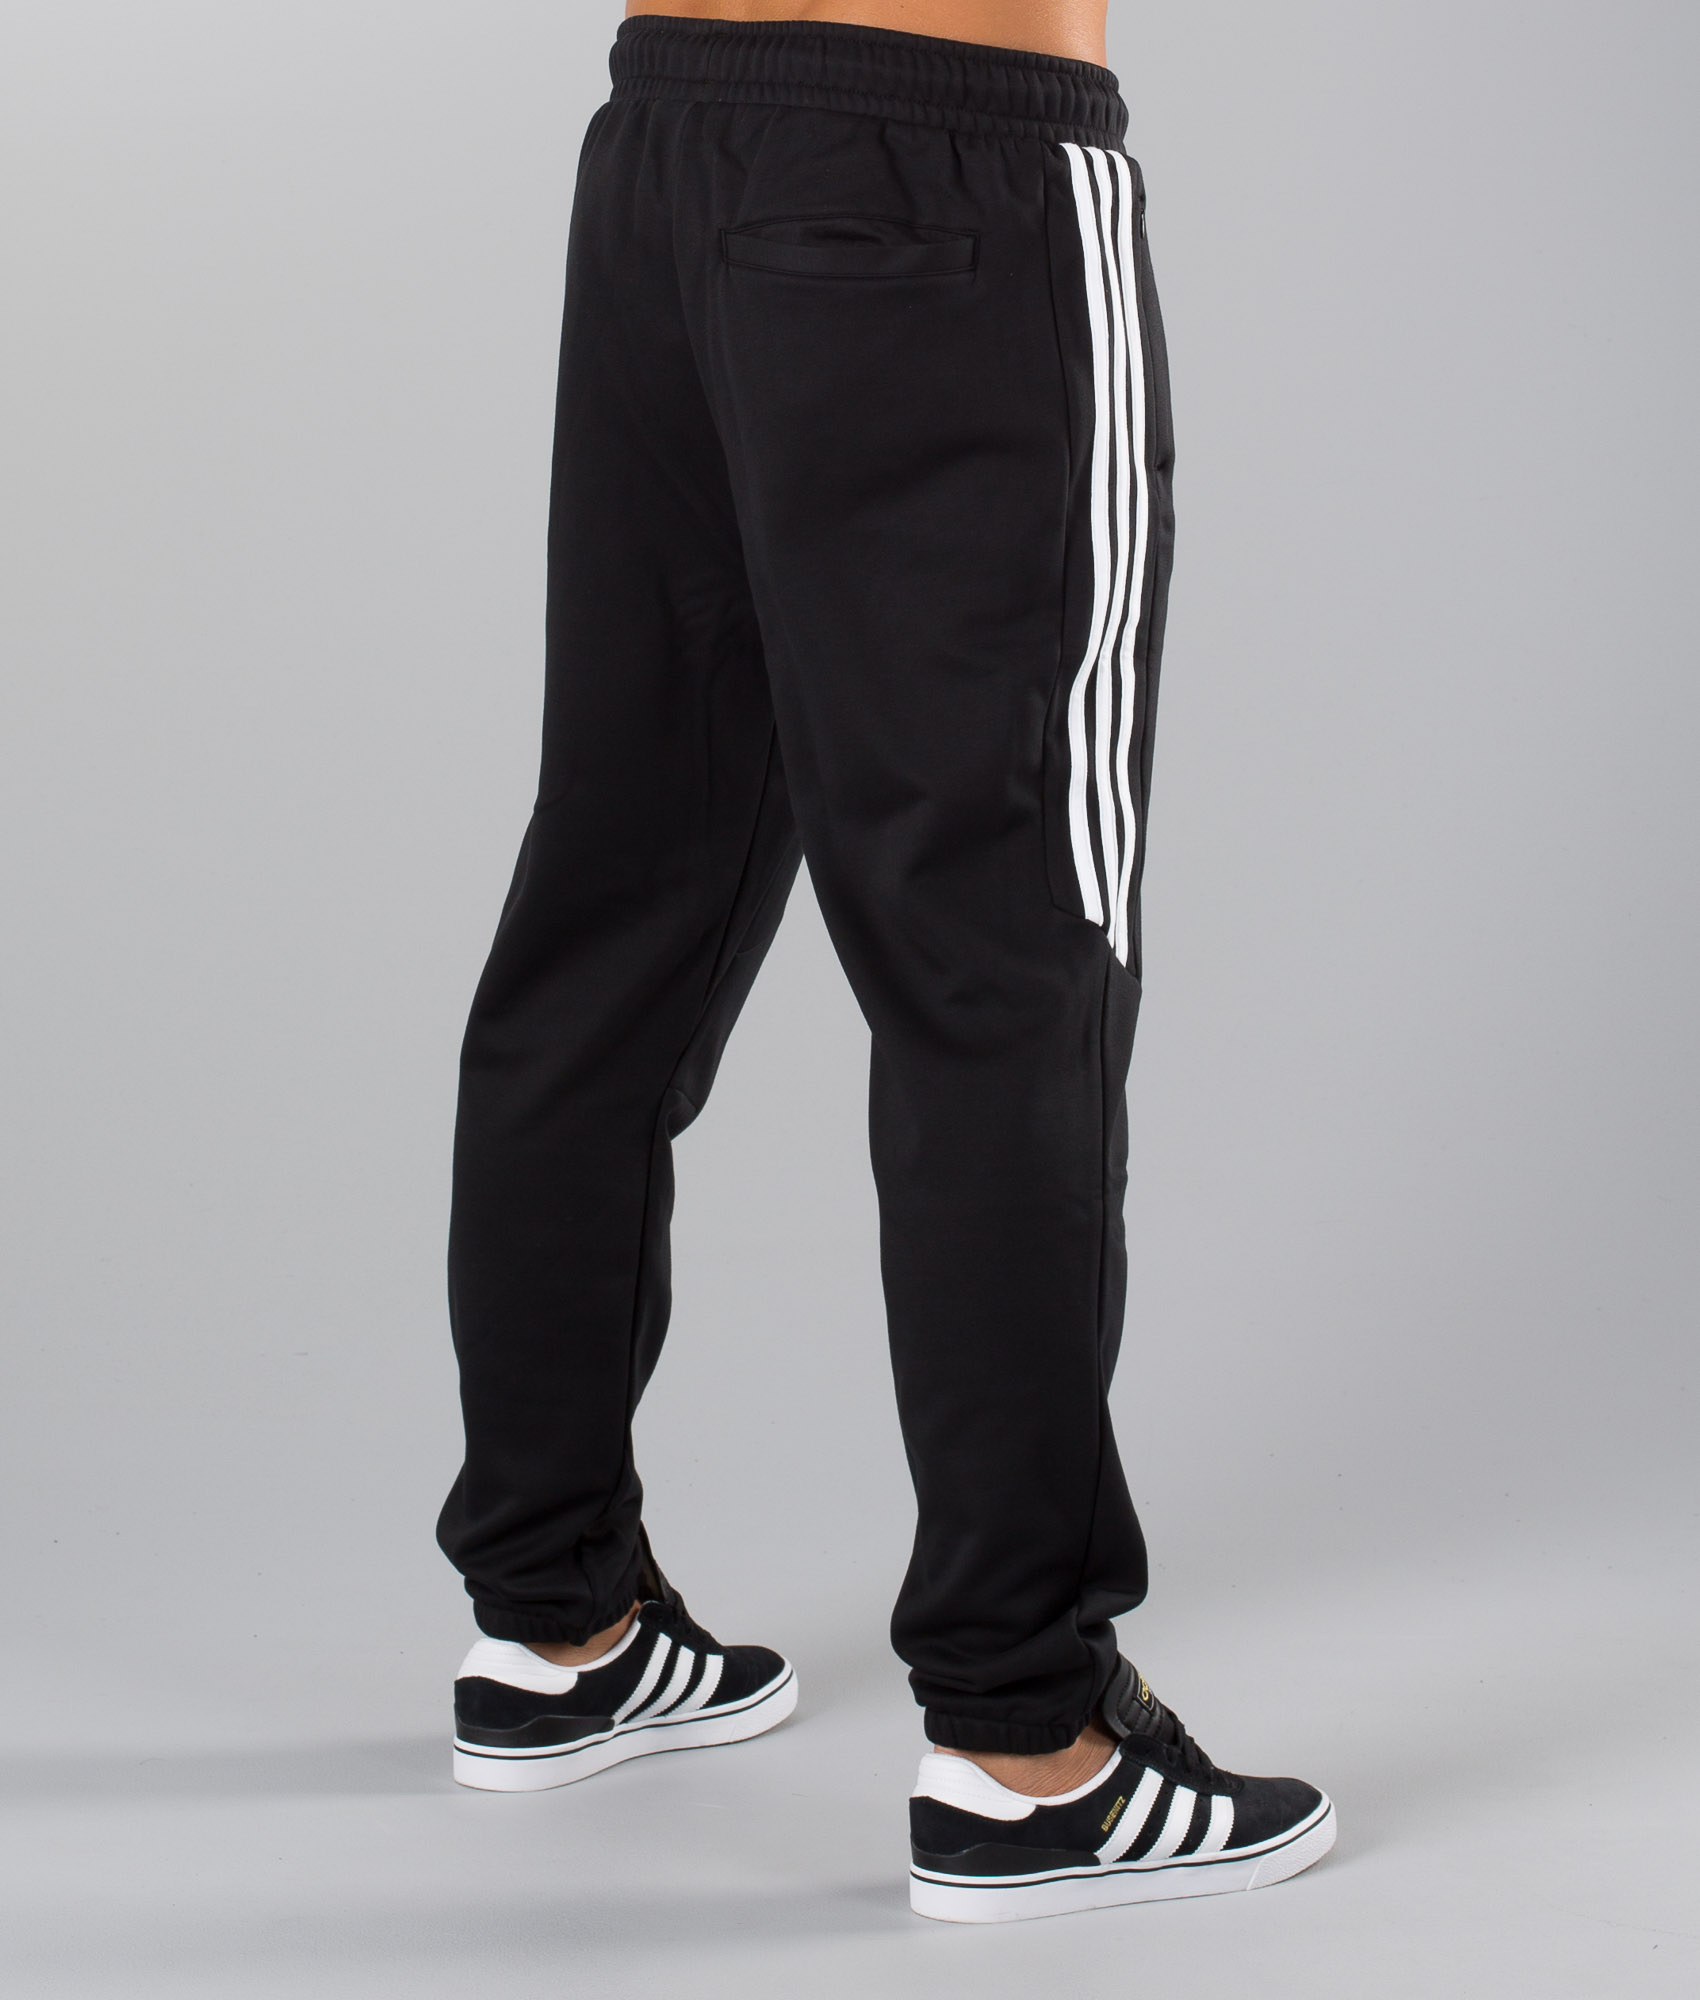 adidas black and white sweatpants